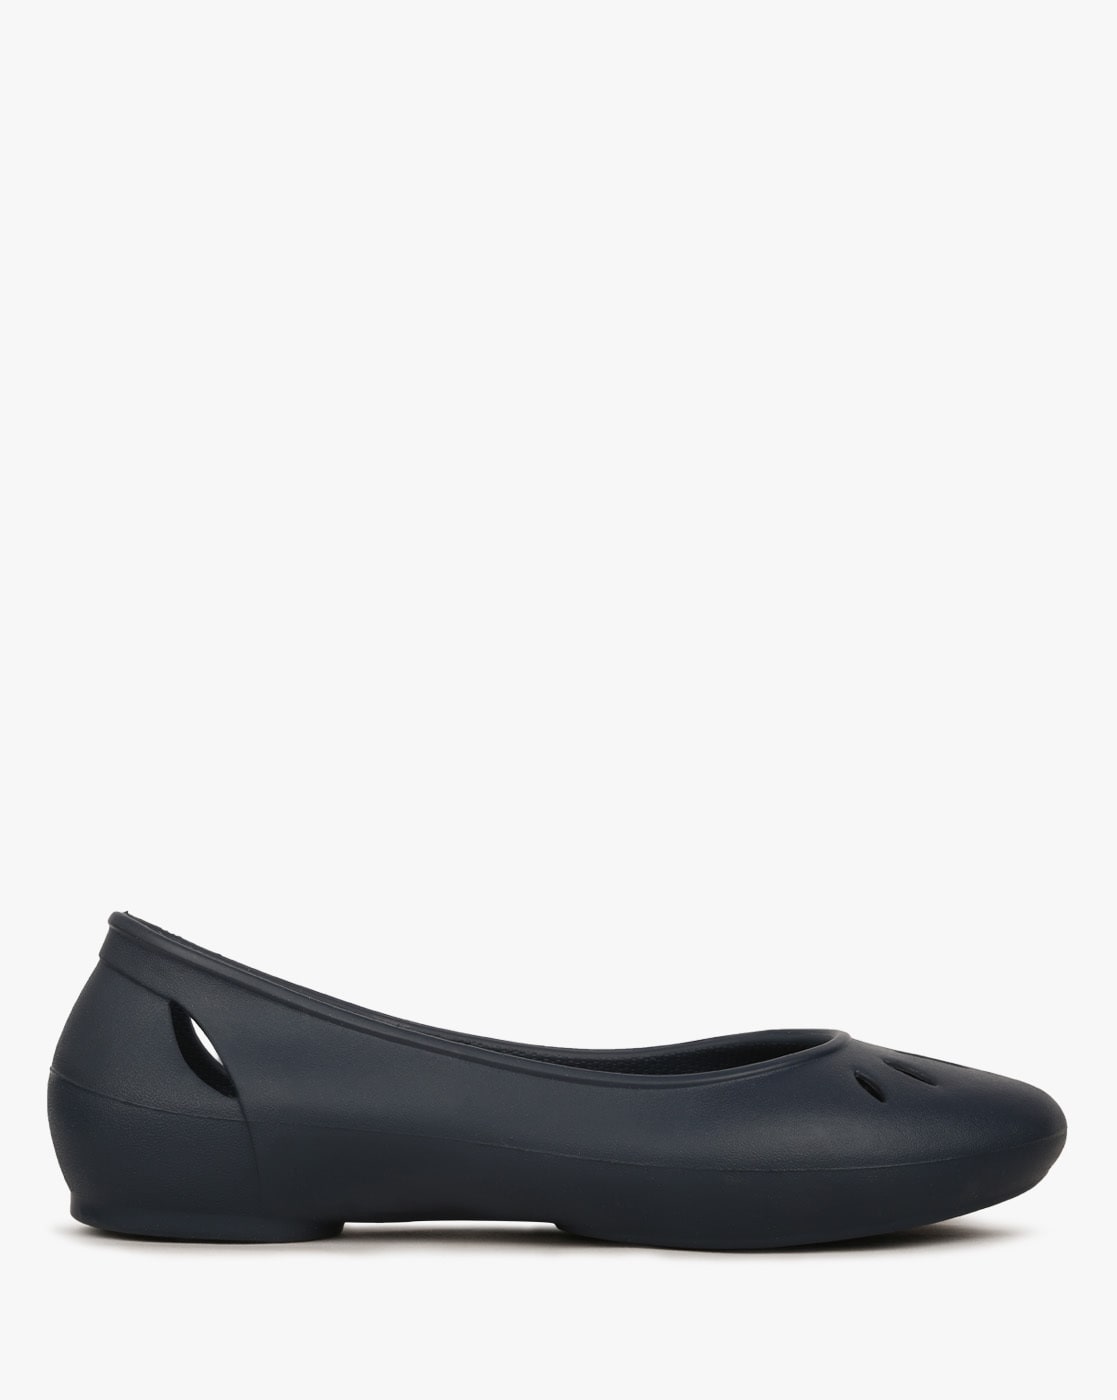 crocs ballerina shoes